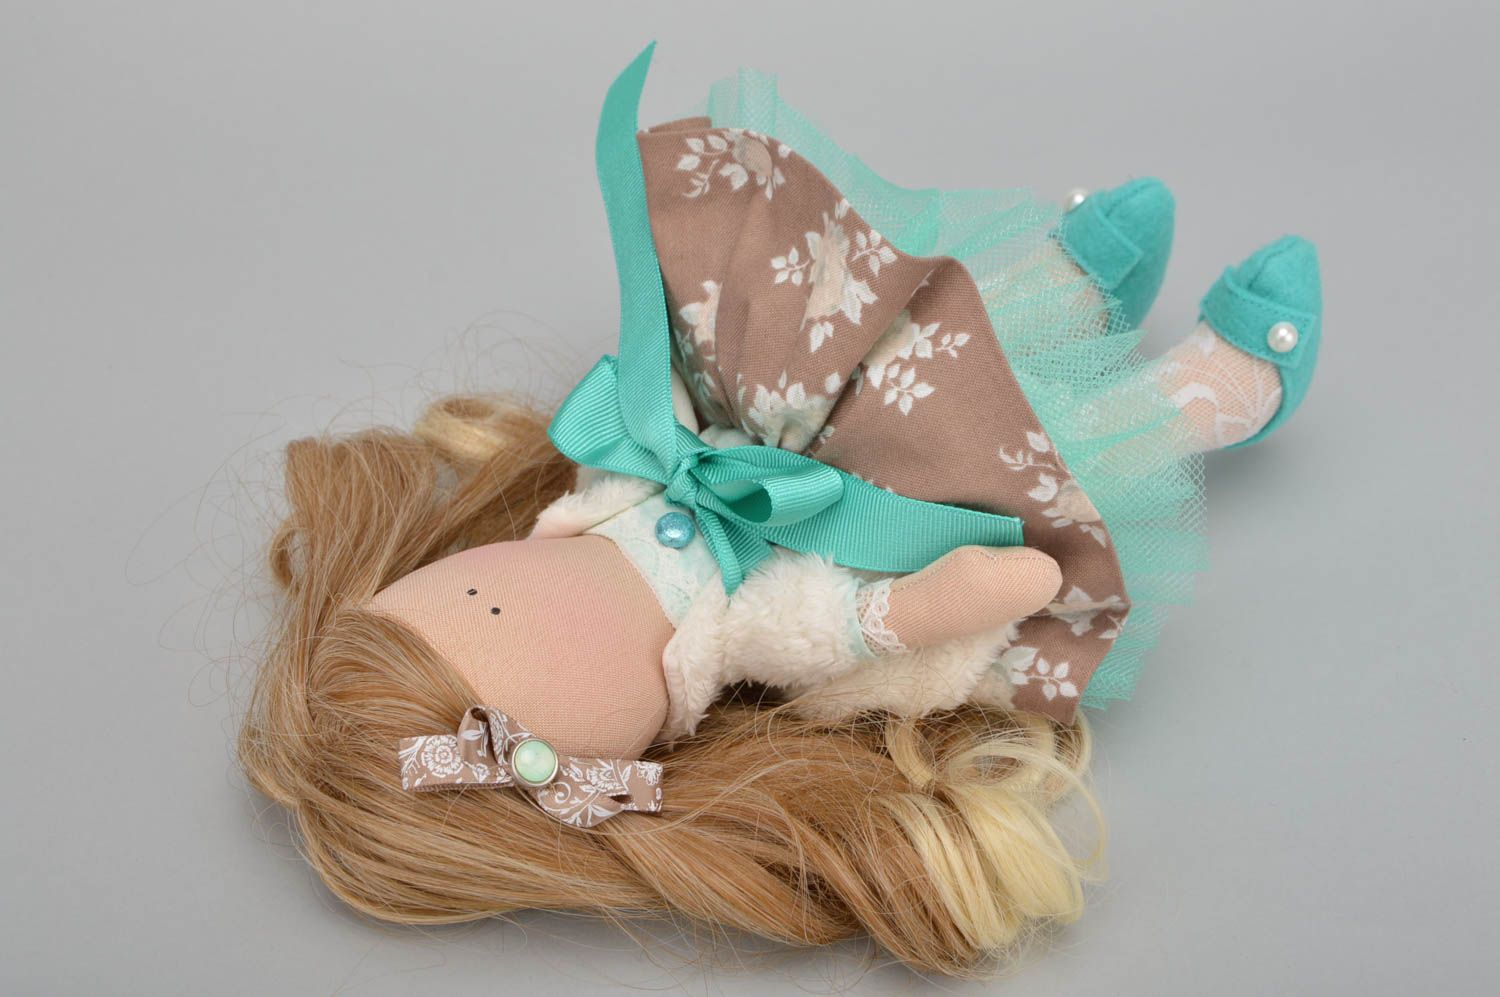 Muñeca decorativa artesanal hecha a mano de tela con vestido bonito de autor foto 4